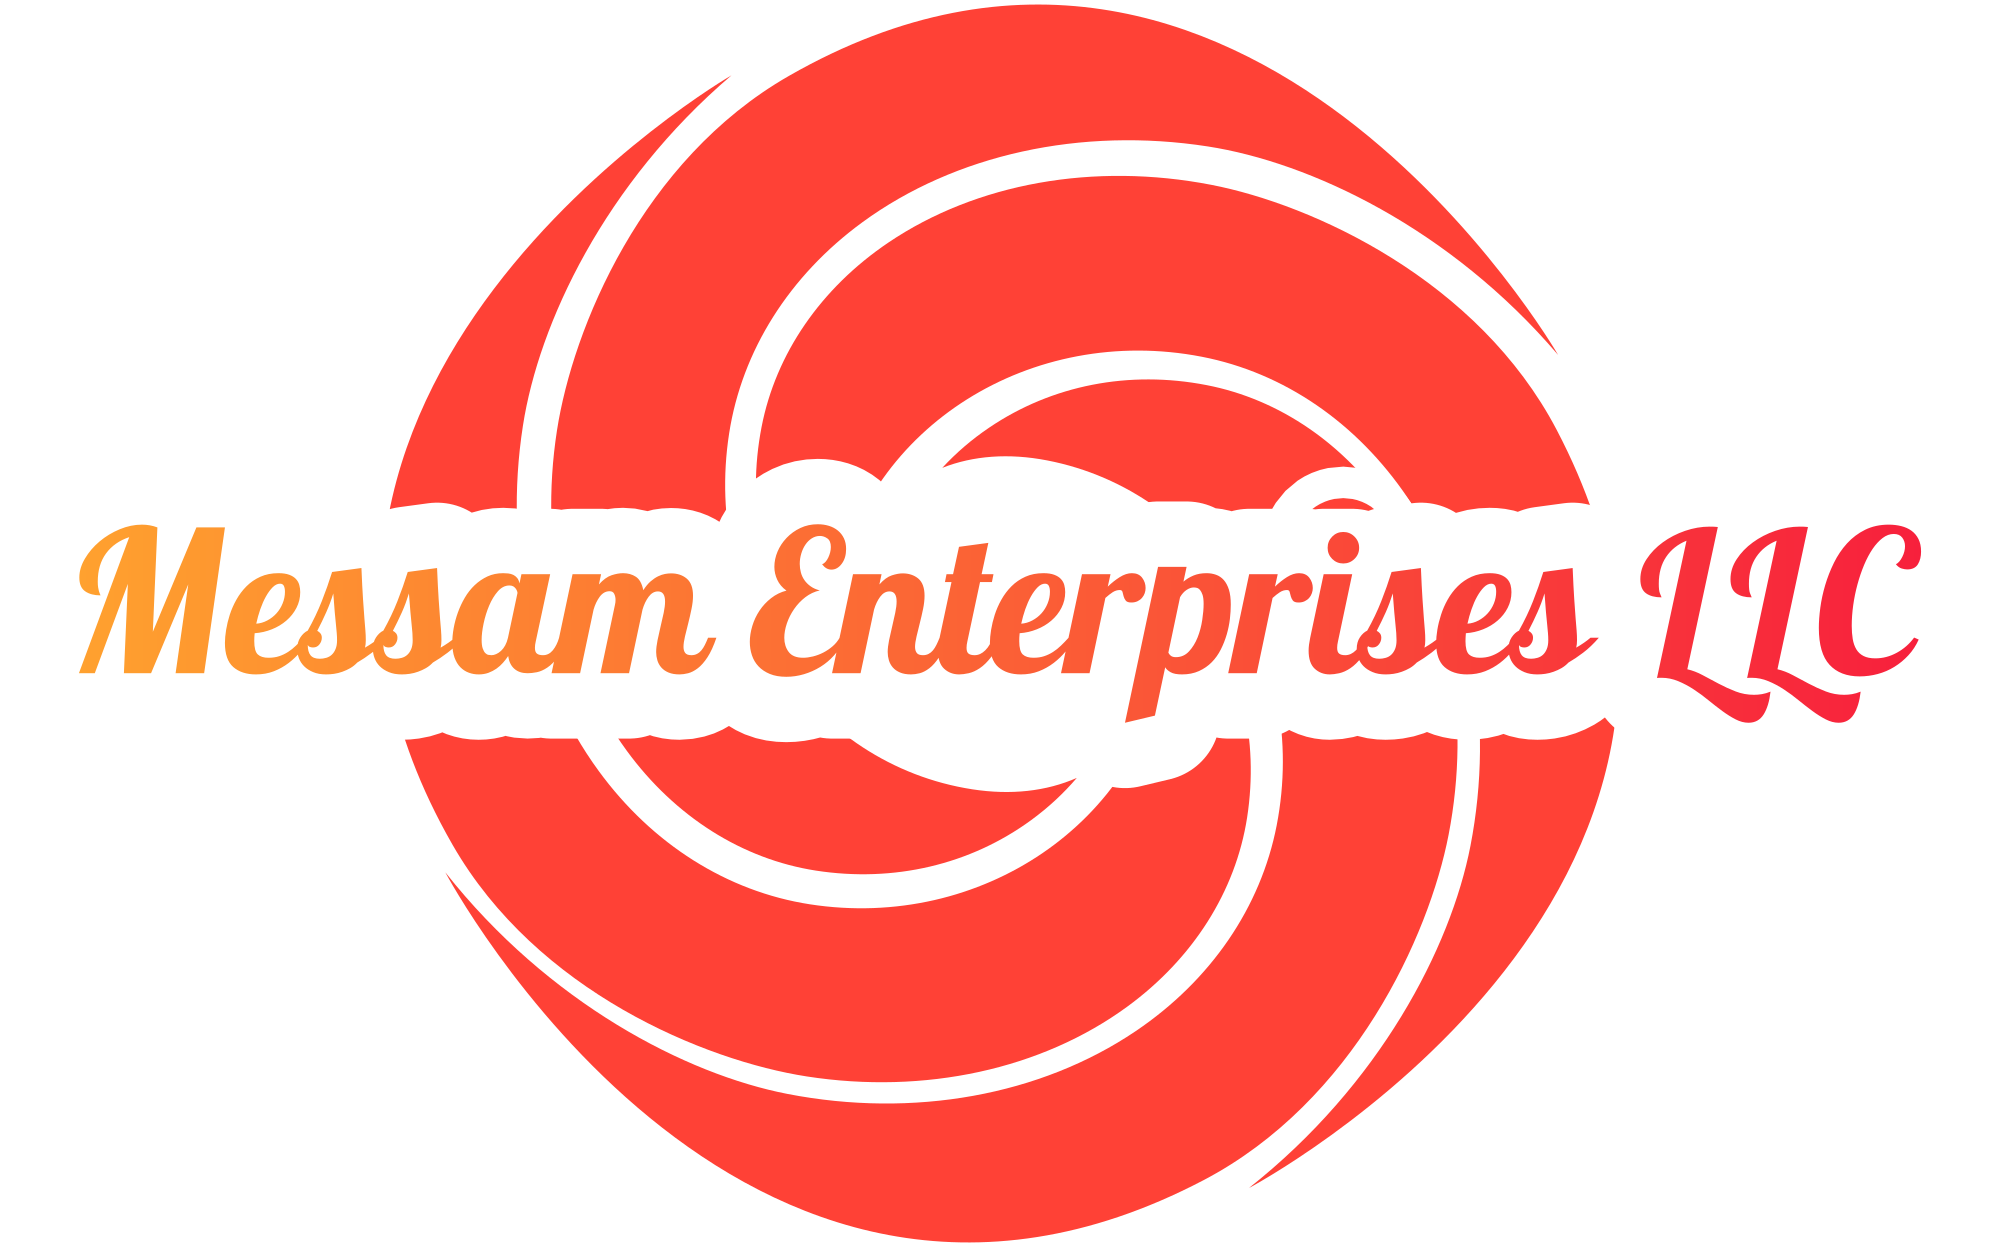 Messam Enterprises LLC